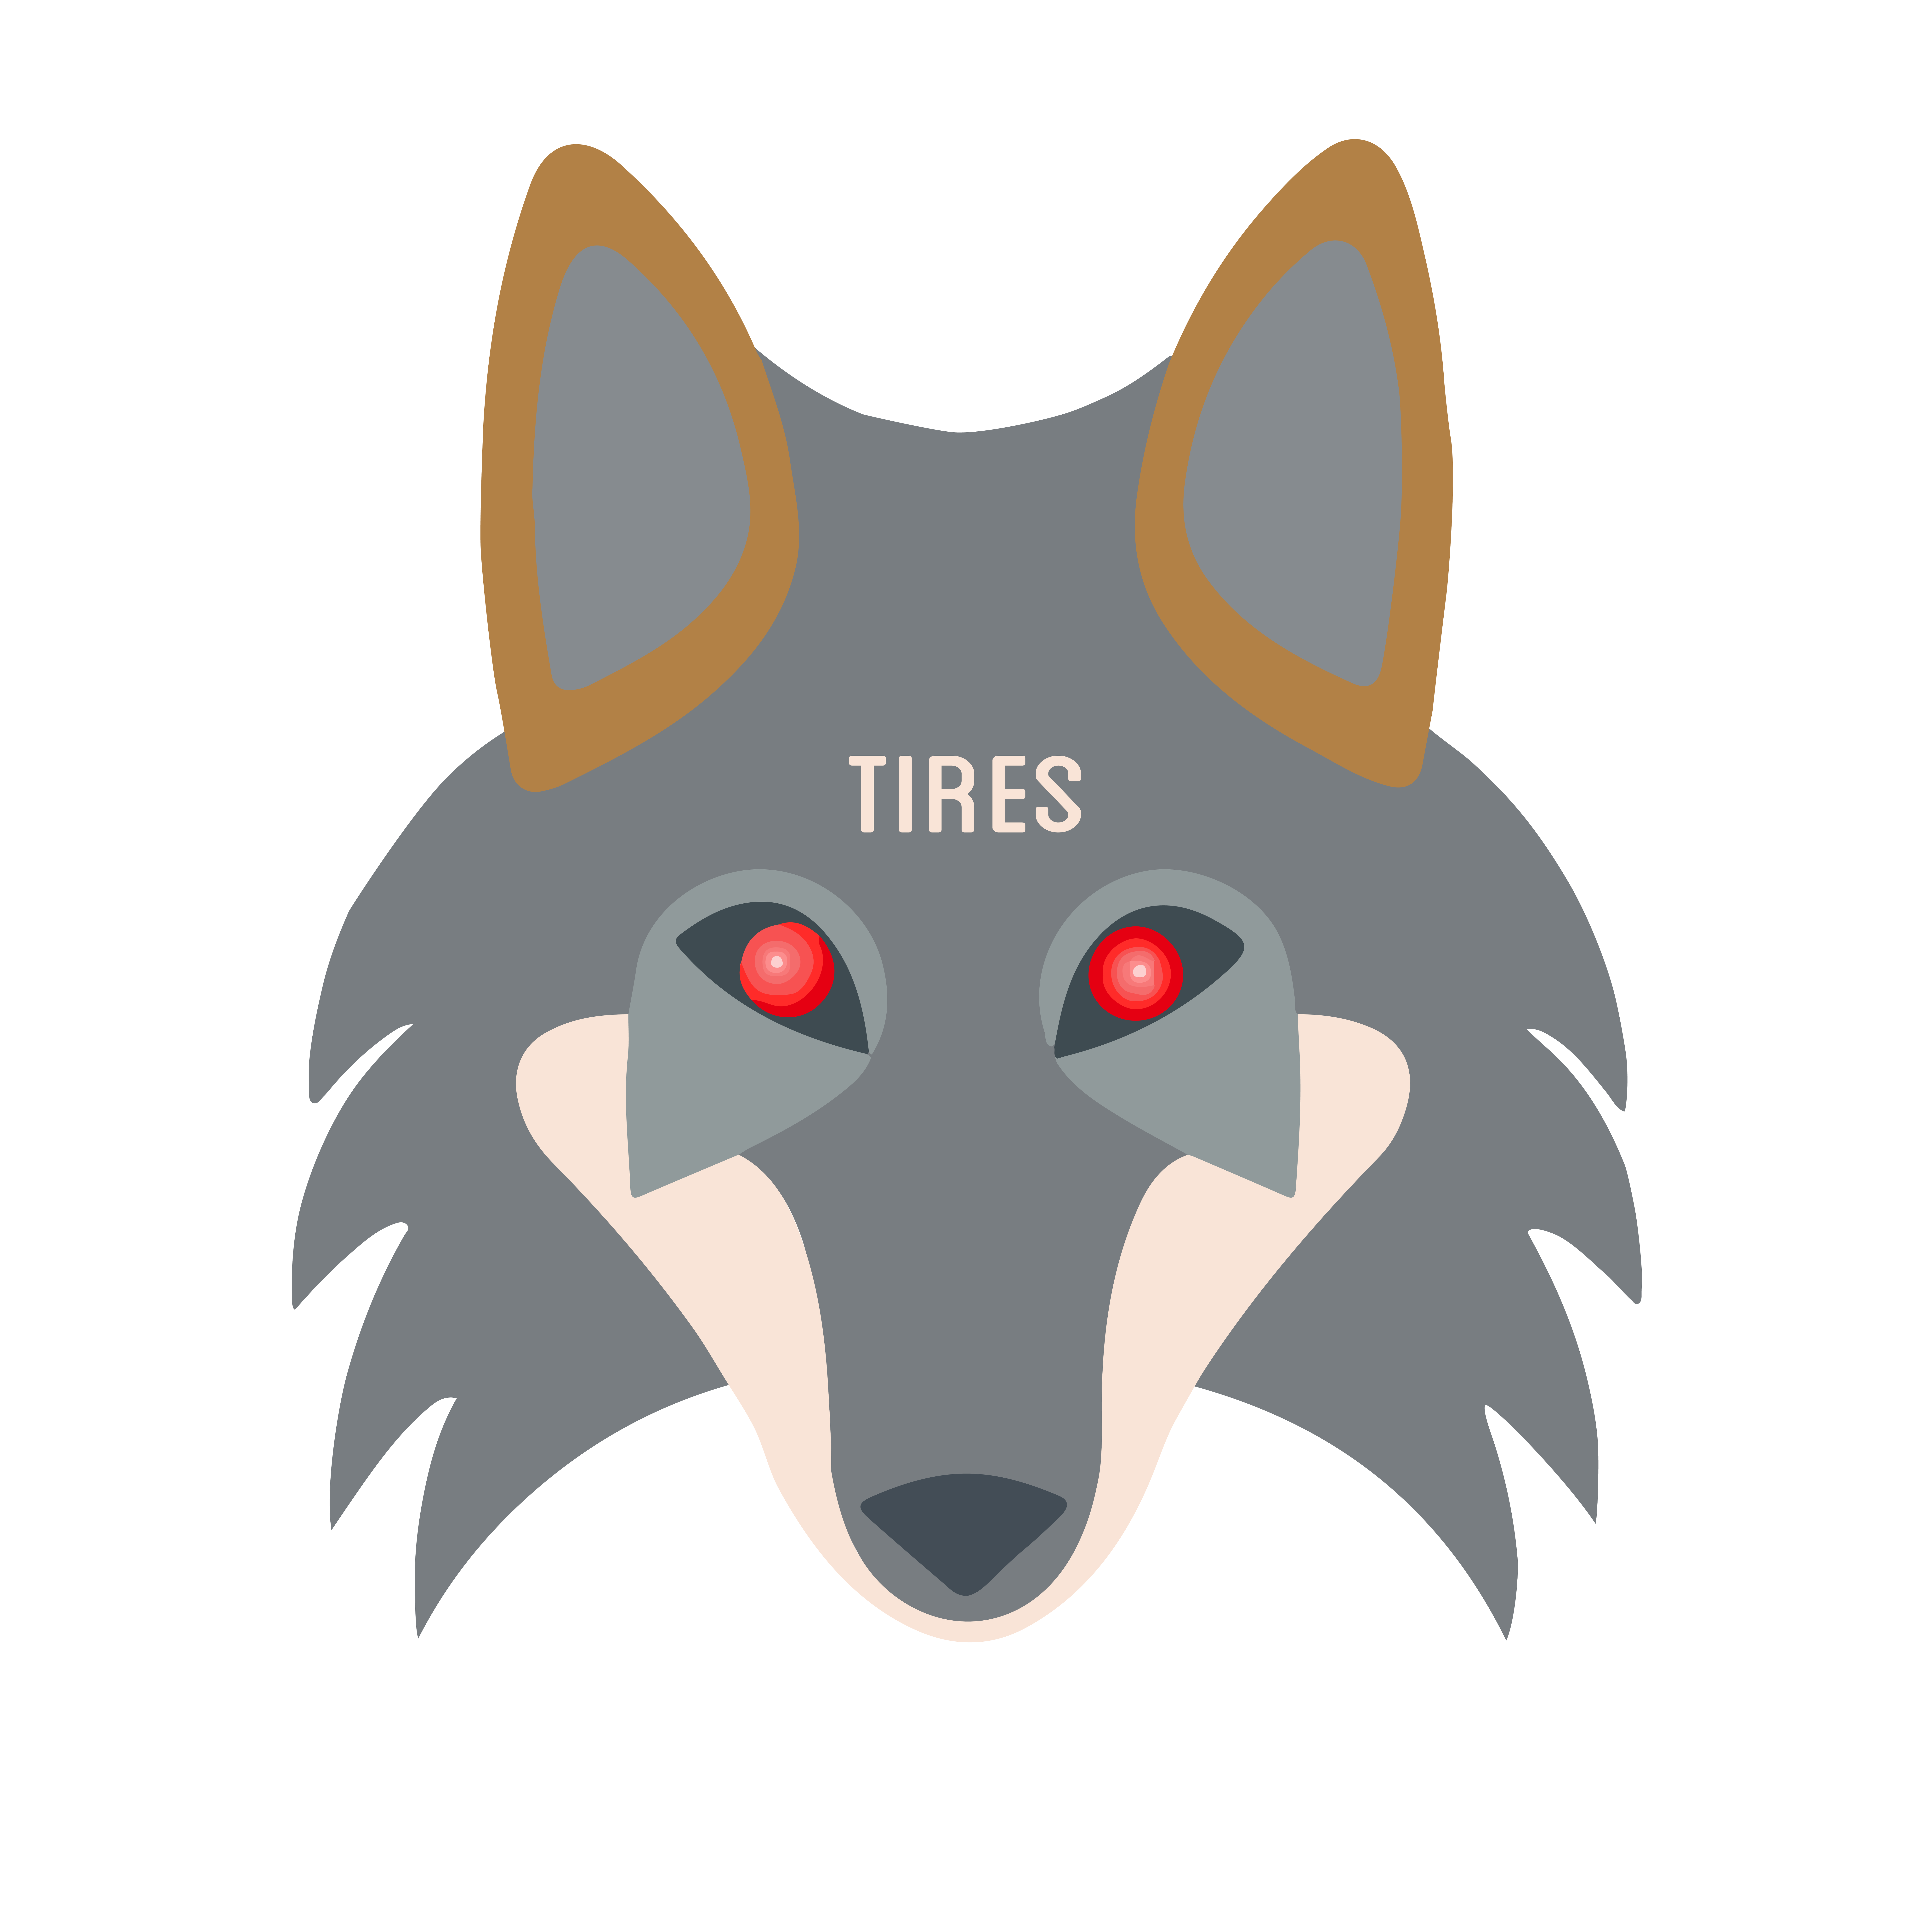 狼emoji符号图片